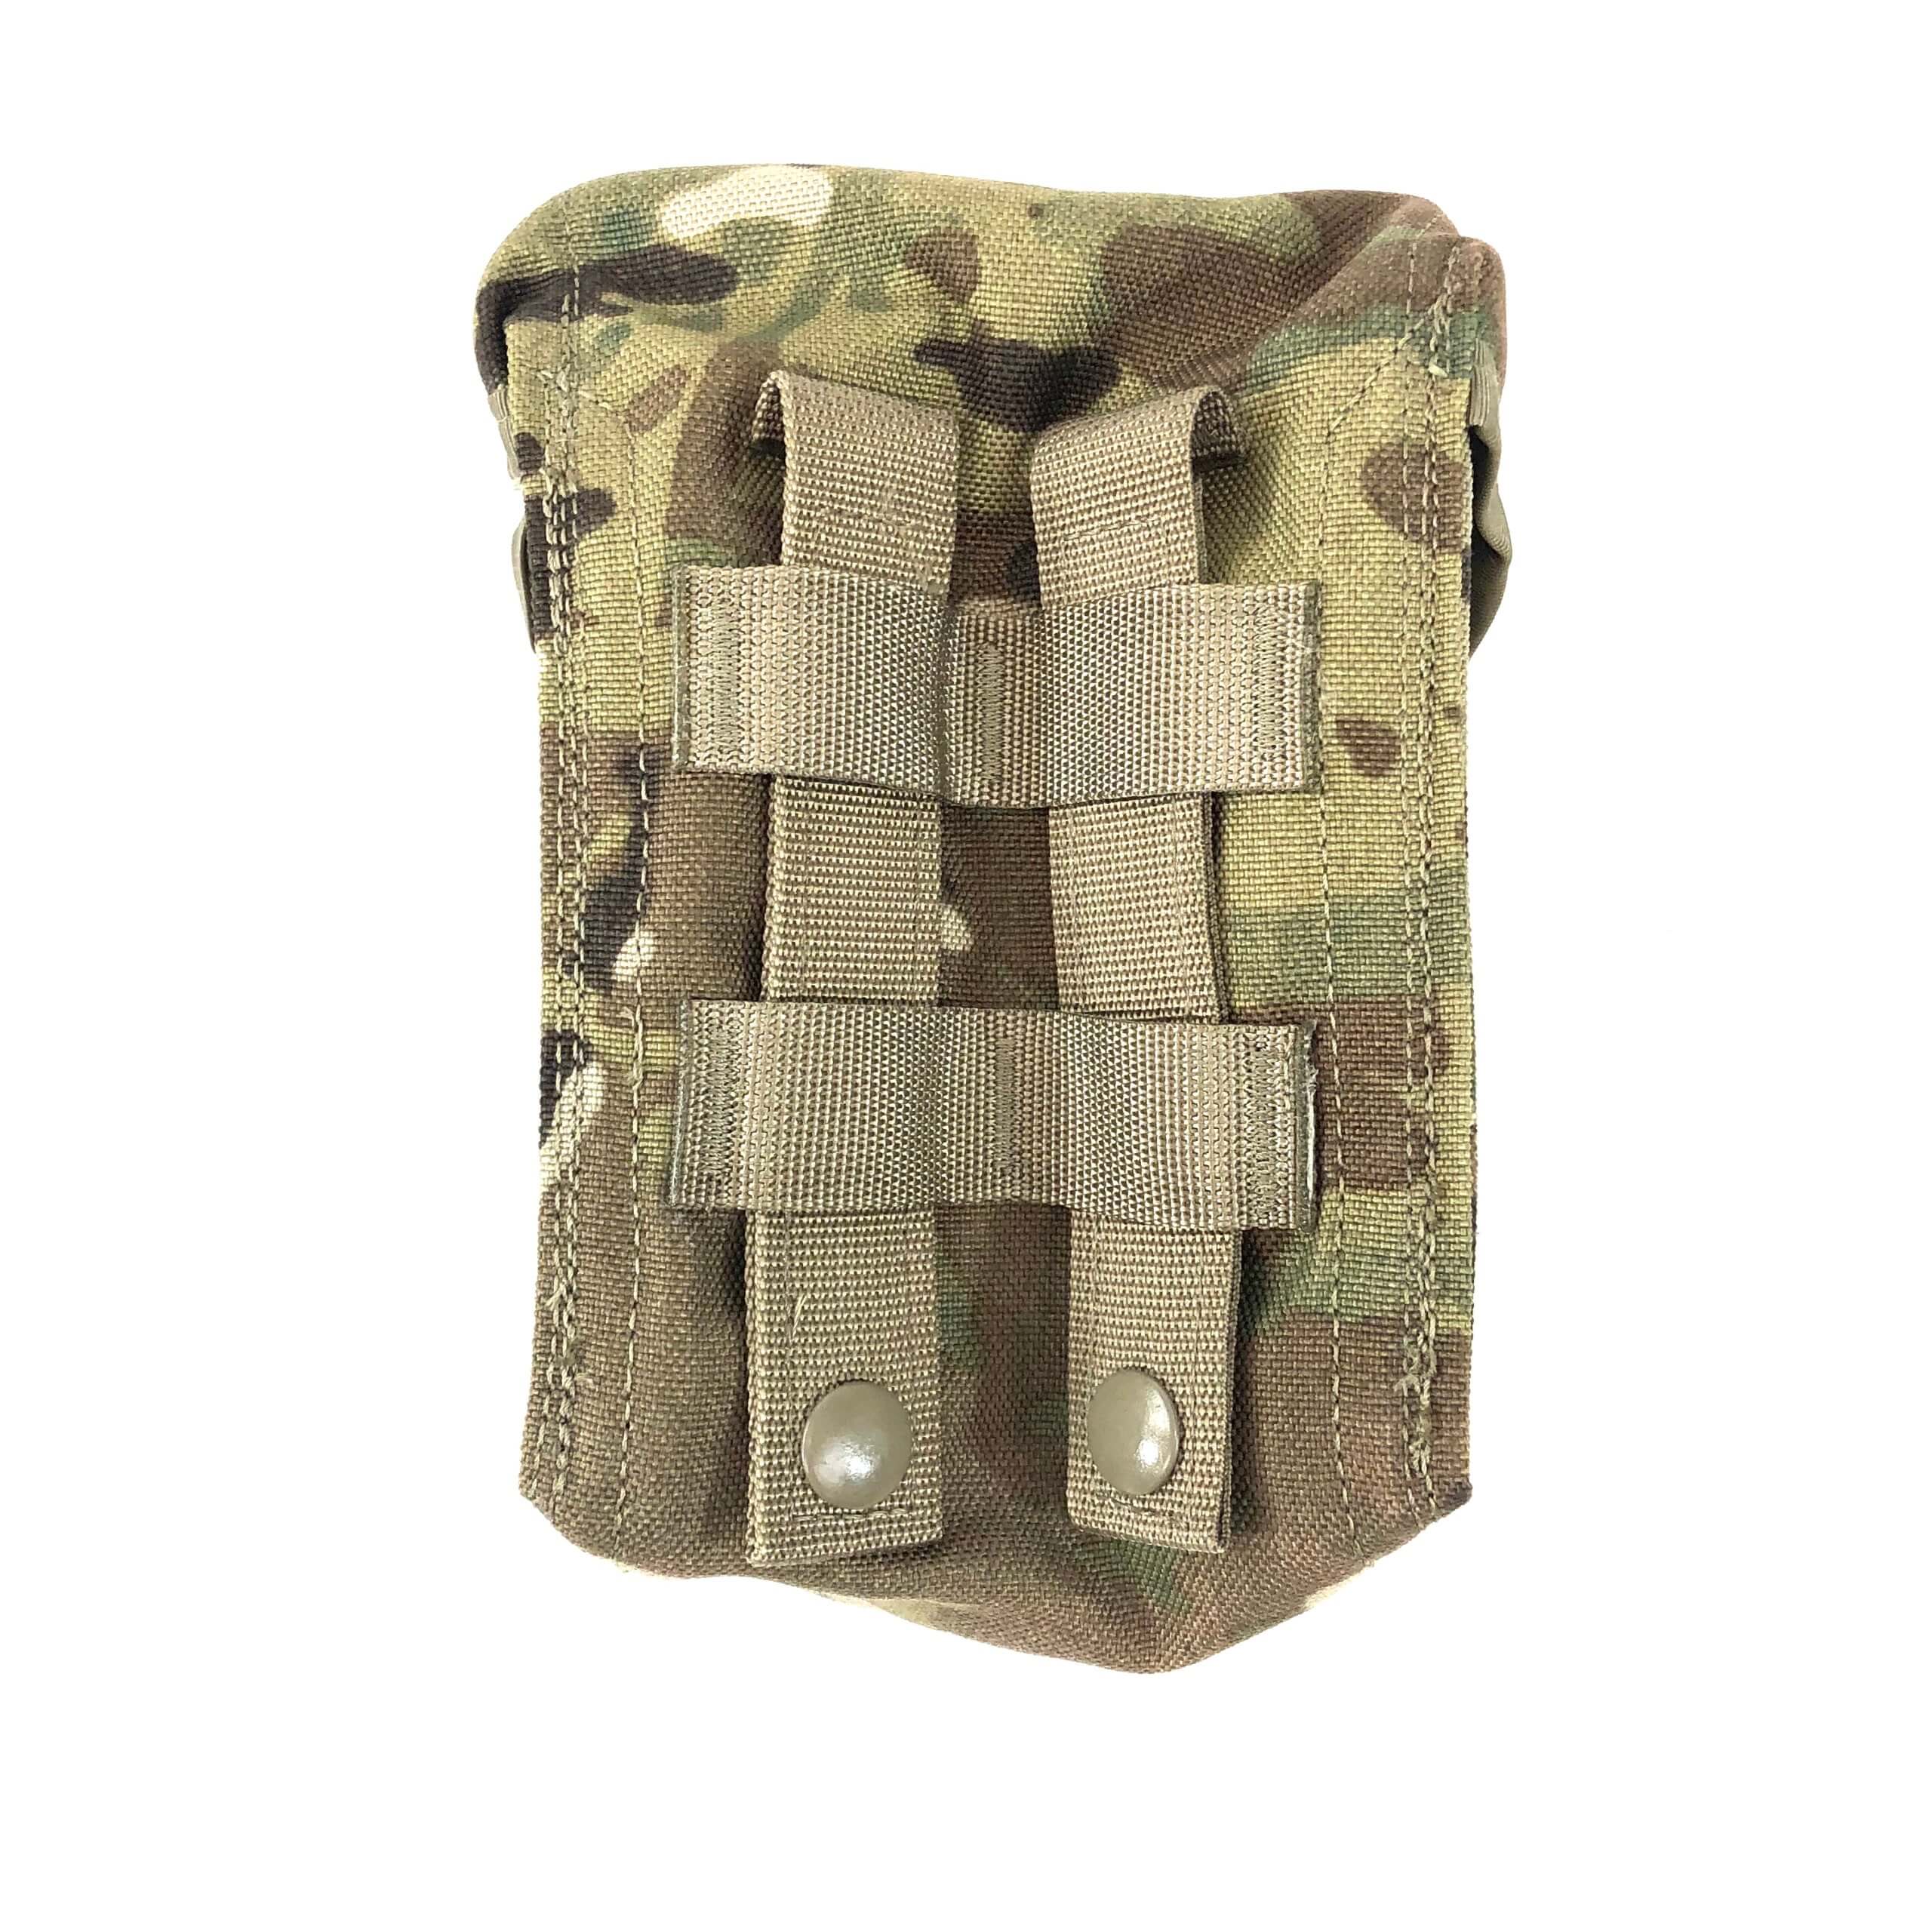 Orig US Army Verbandspäckchen Tasche f First Aid Dressing Kit Pouch Carrier Belt 